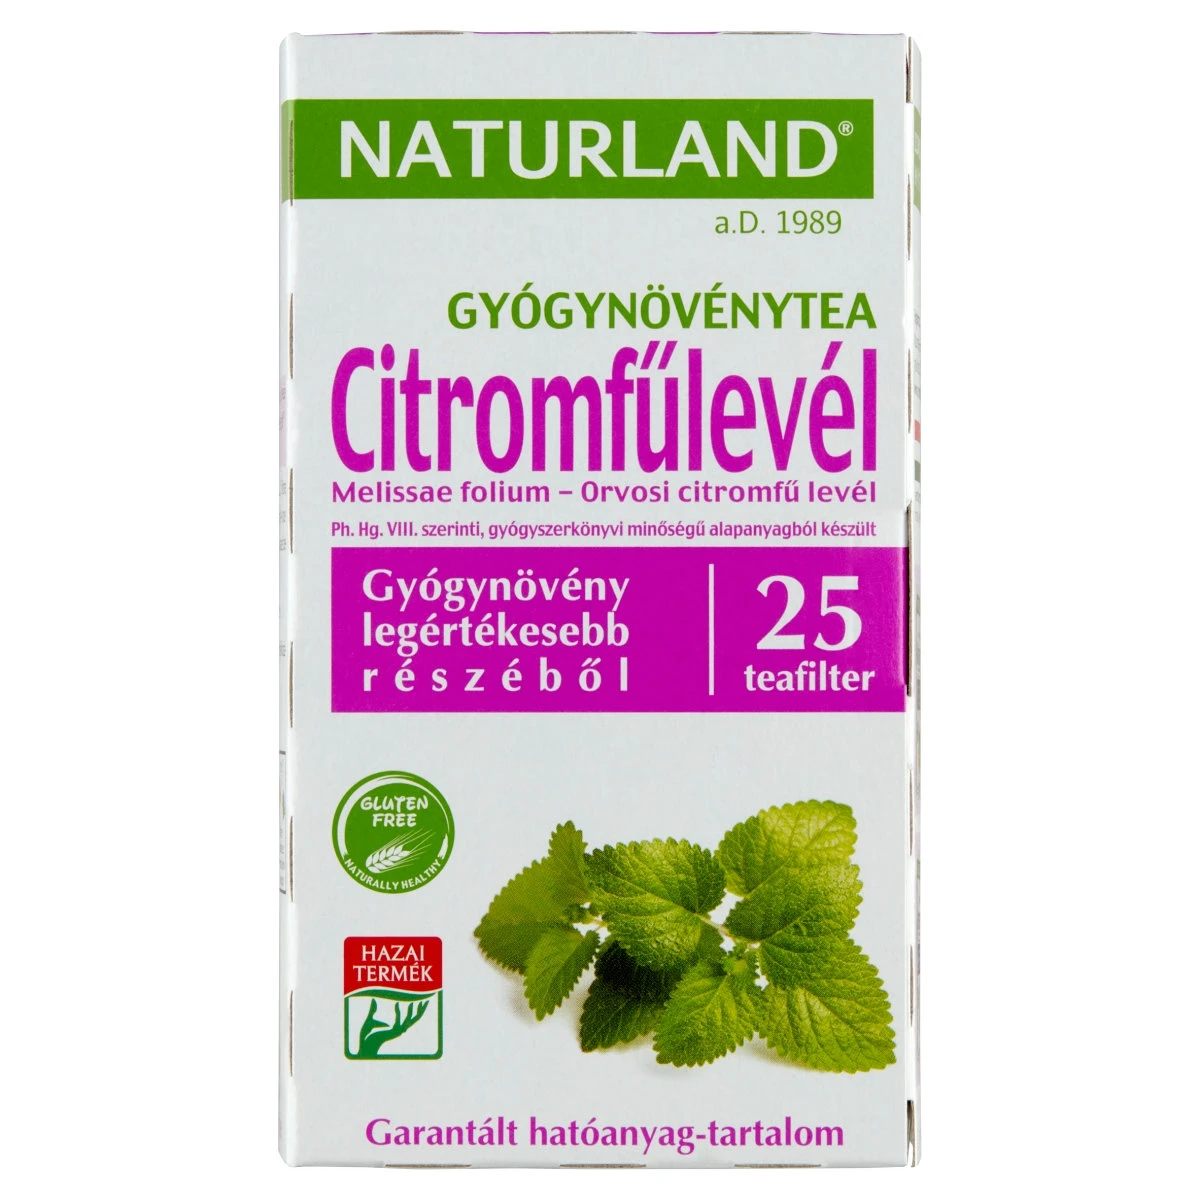 Naturland Herbal citromfűlevél gyógynövénytea 25 filter 25 g